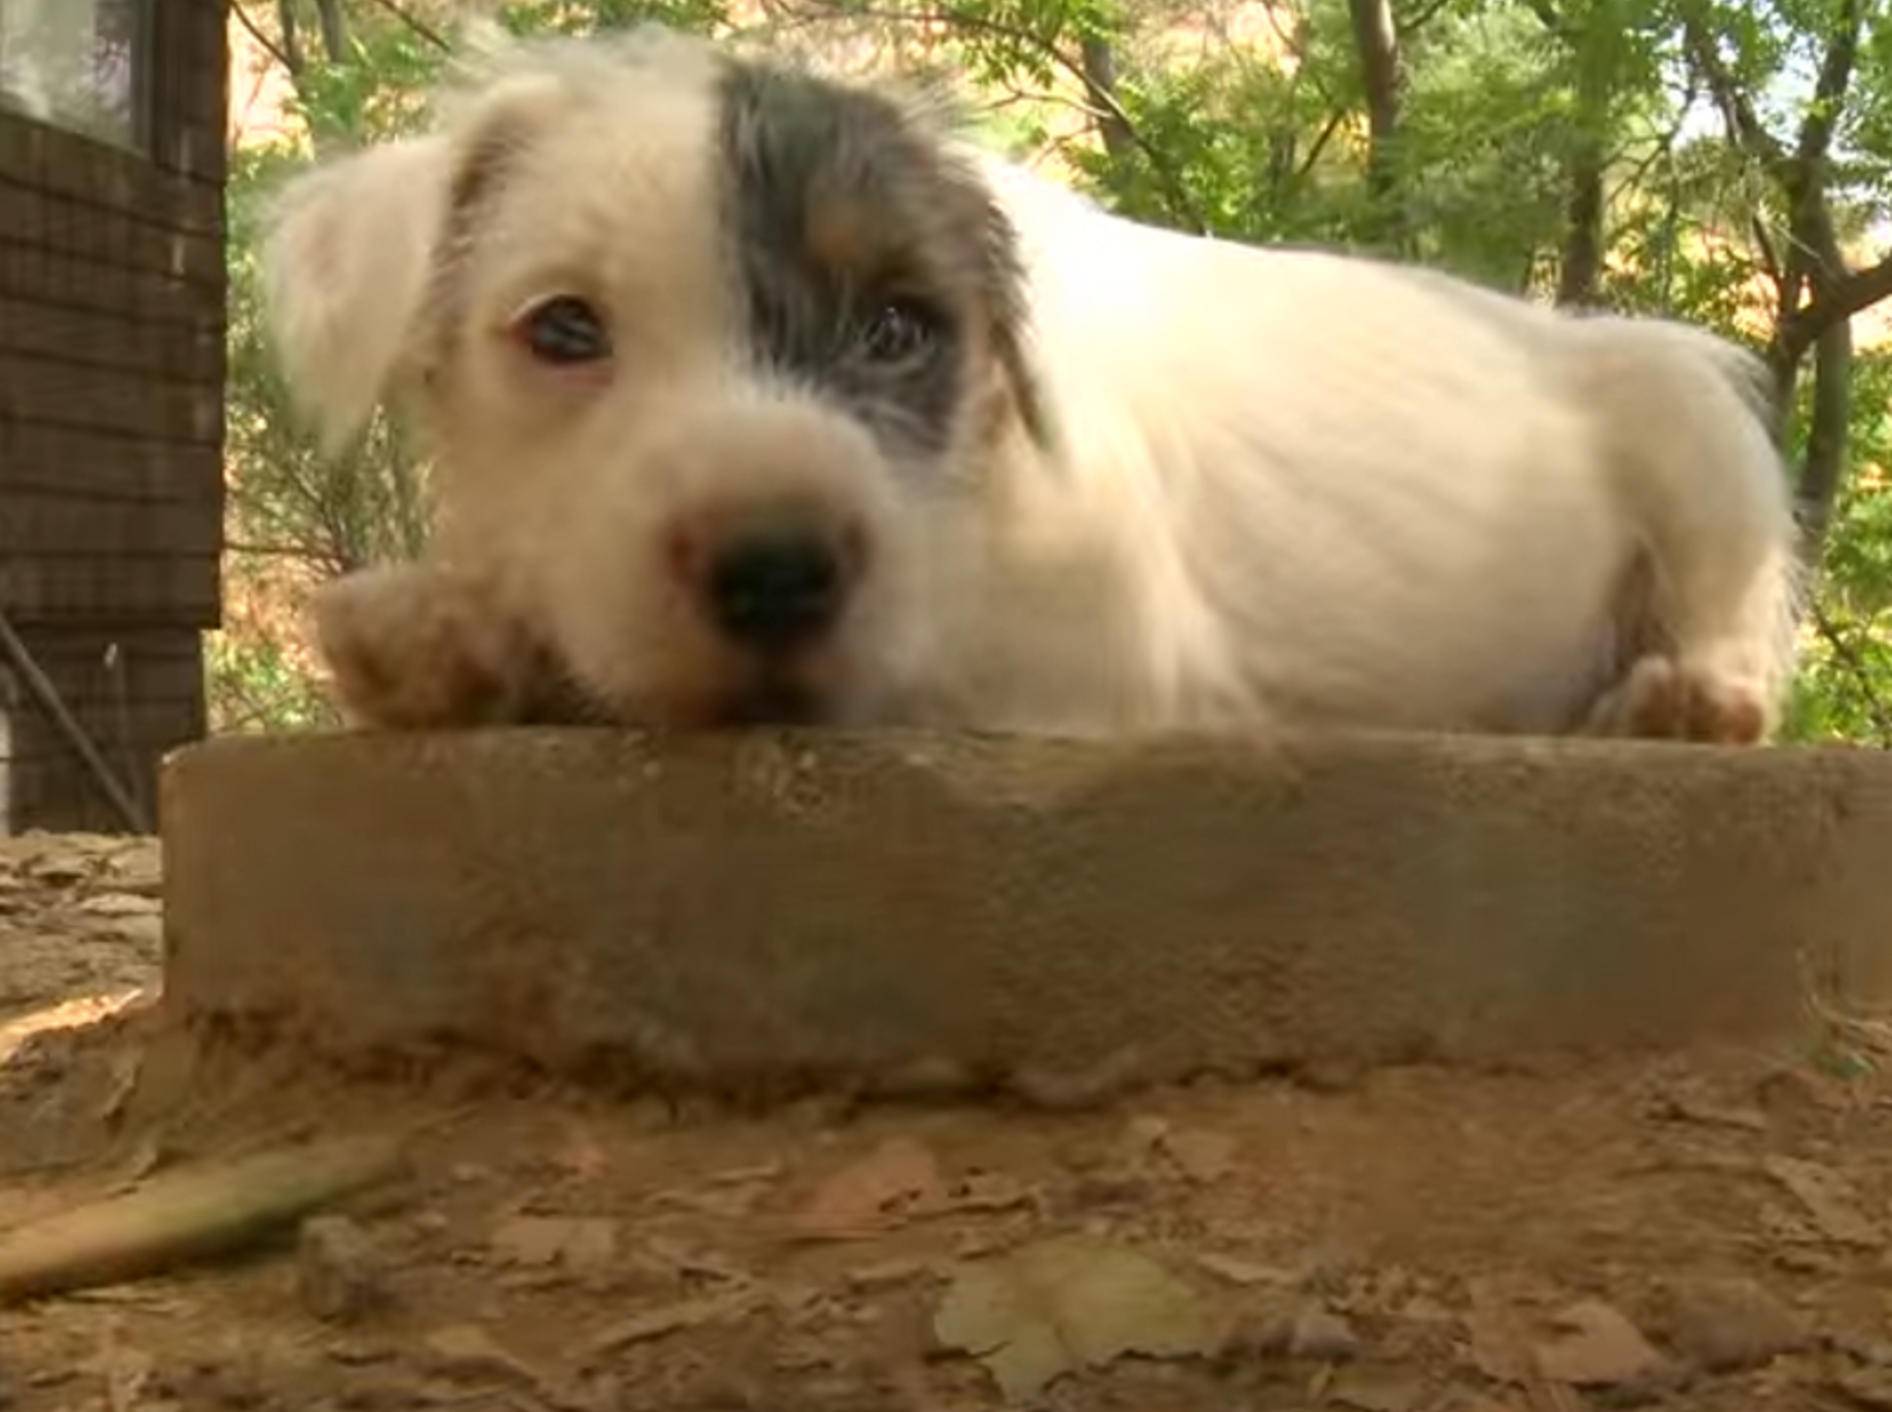 Total vergnügt: Parson Russell Terrier toben im Garten – Bild: YouTube / The Pet Collective